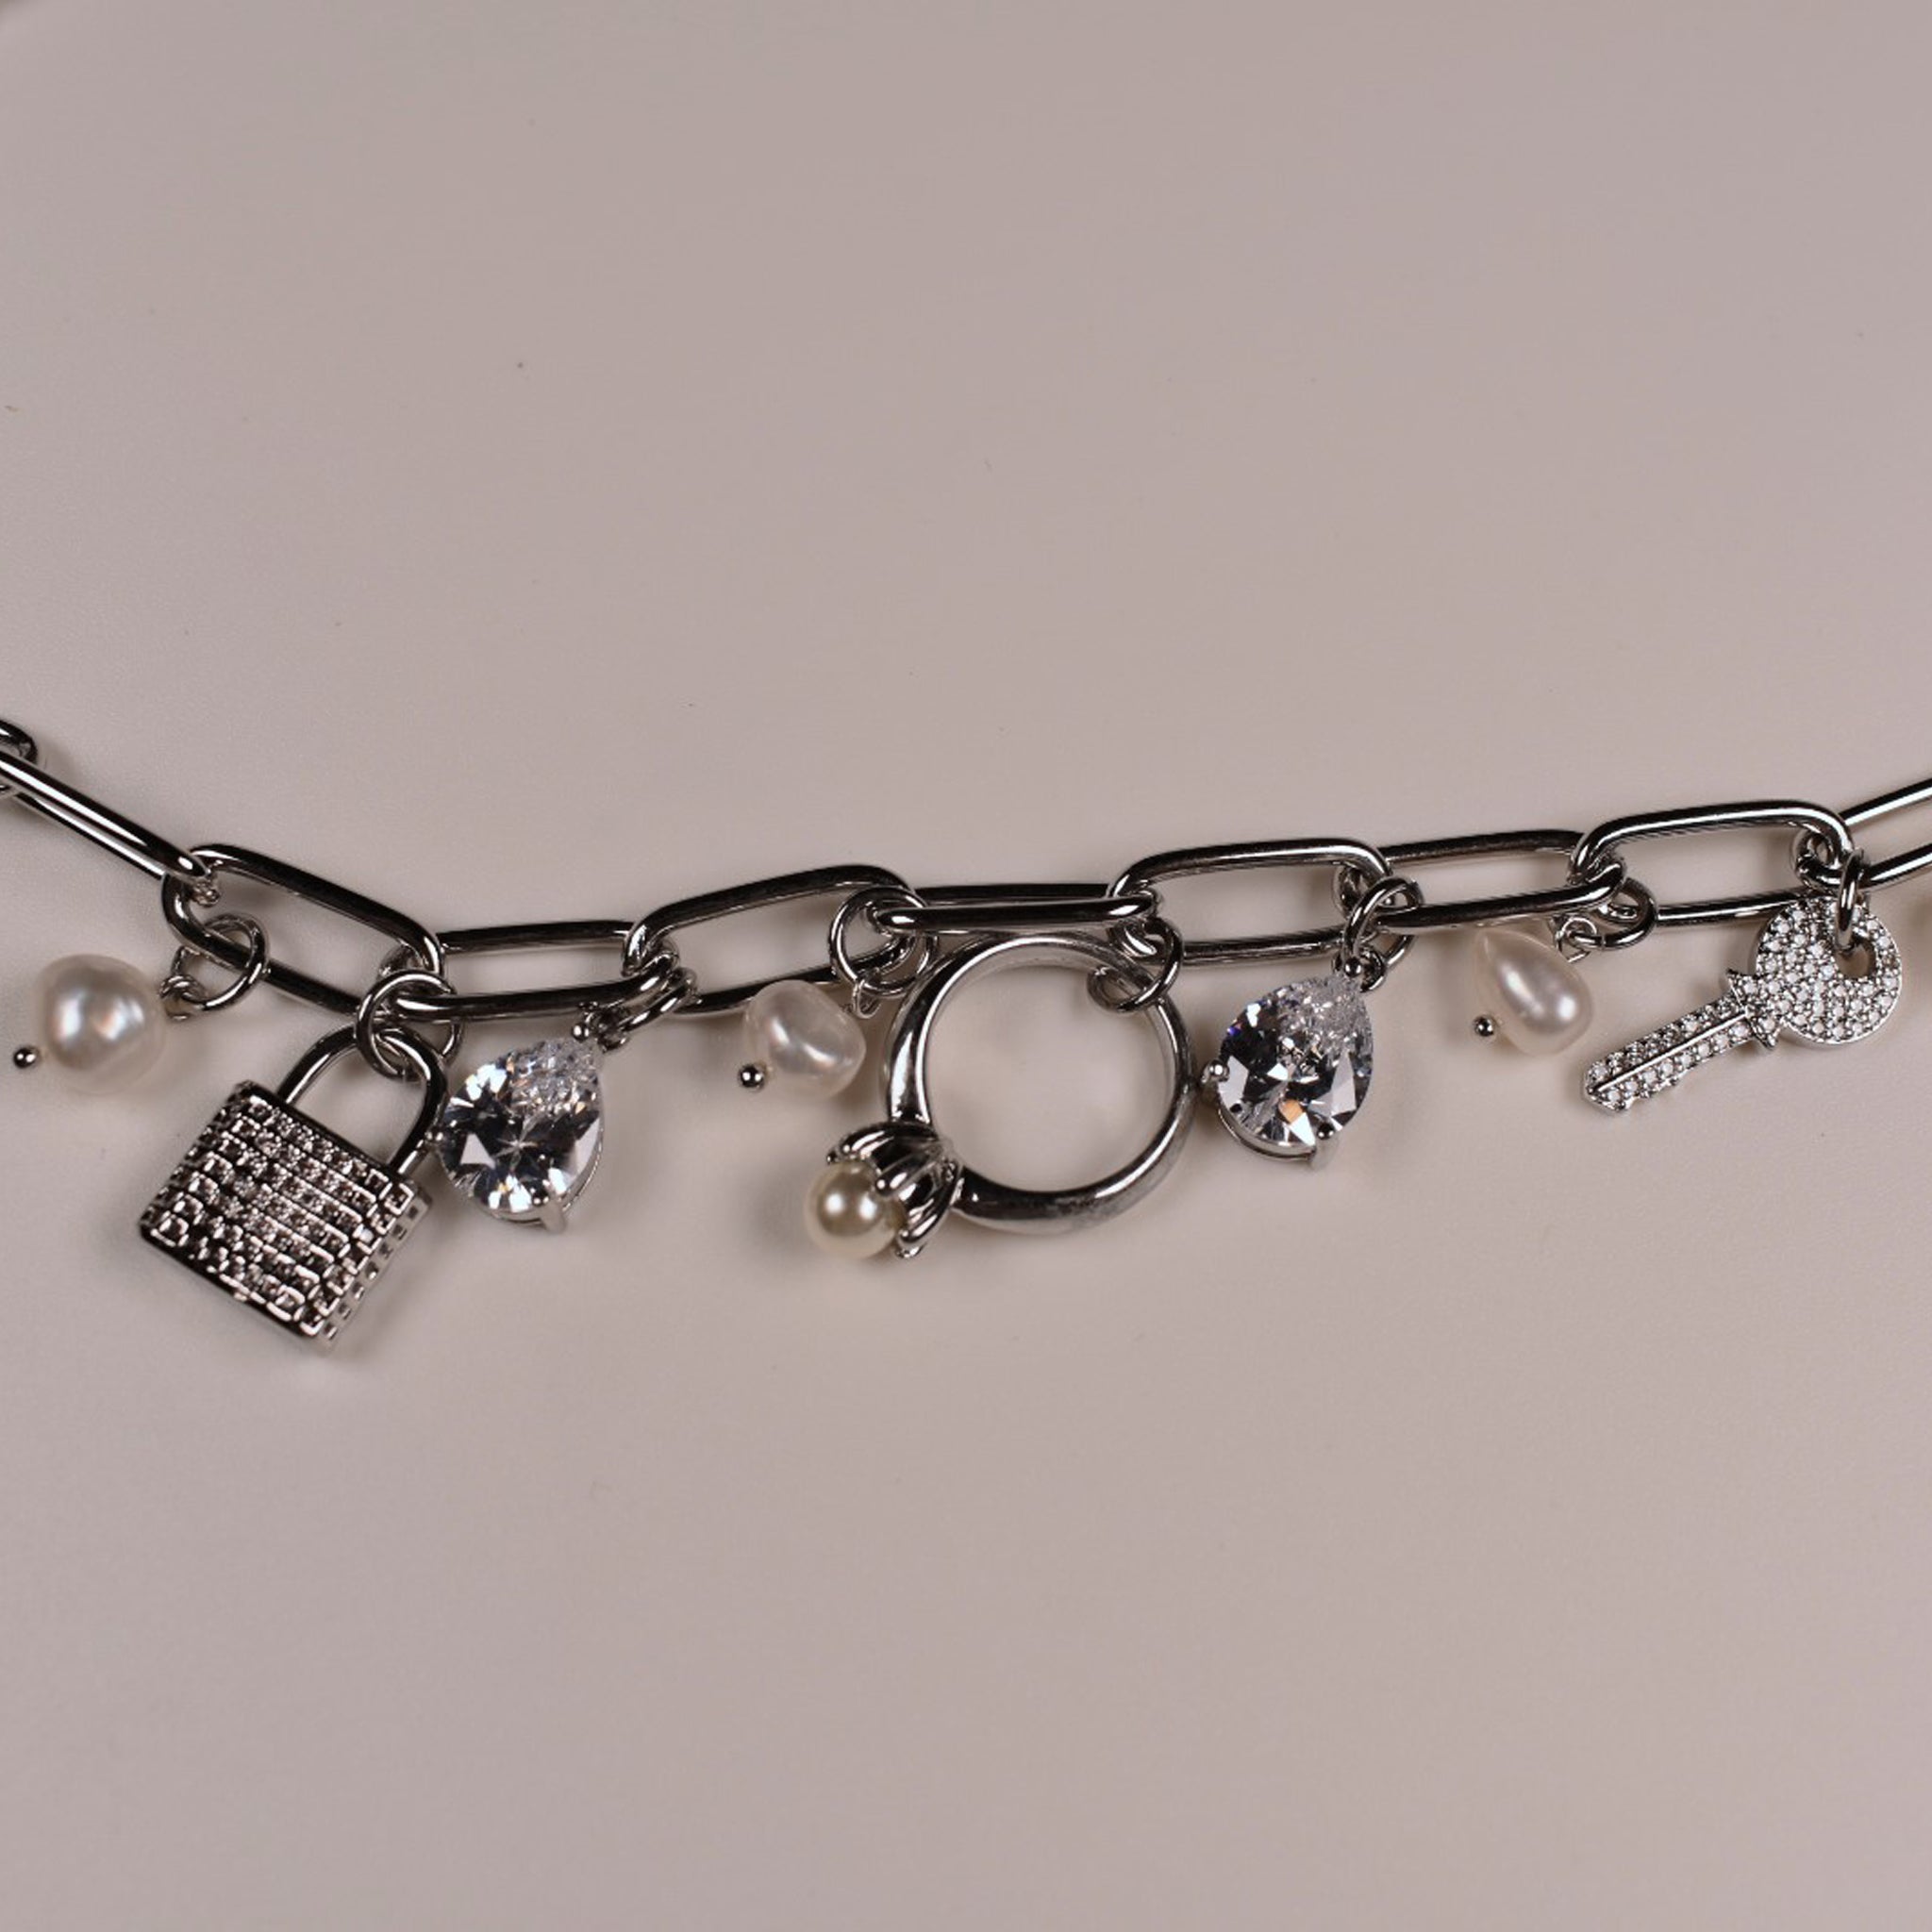 Pearls of Korea - Key Lock Chain Necklace